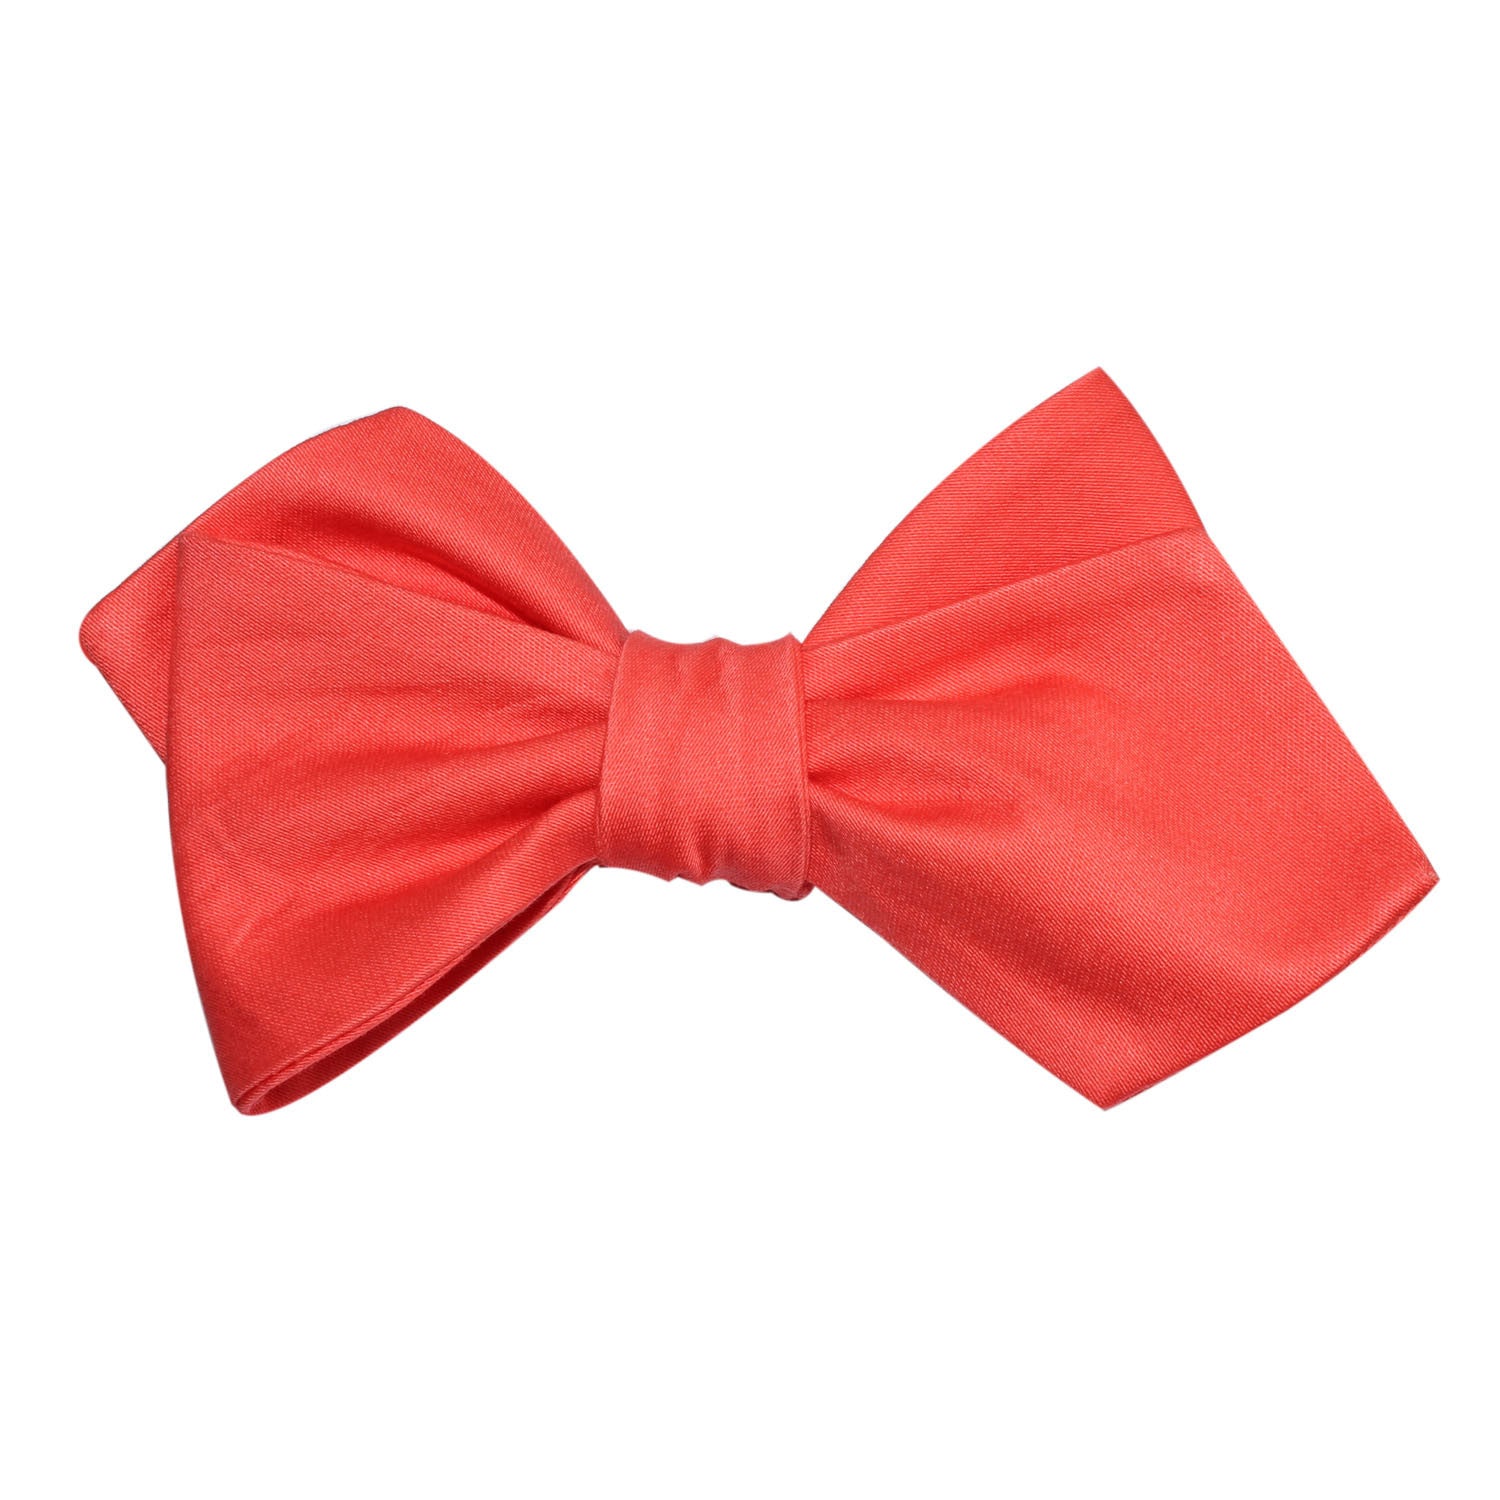 Coral Pink Cotton Self Tie Diamond Tip Bow Tie 2